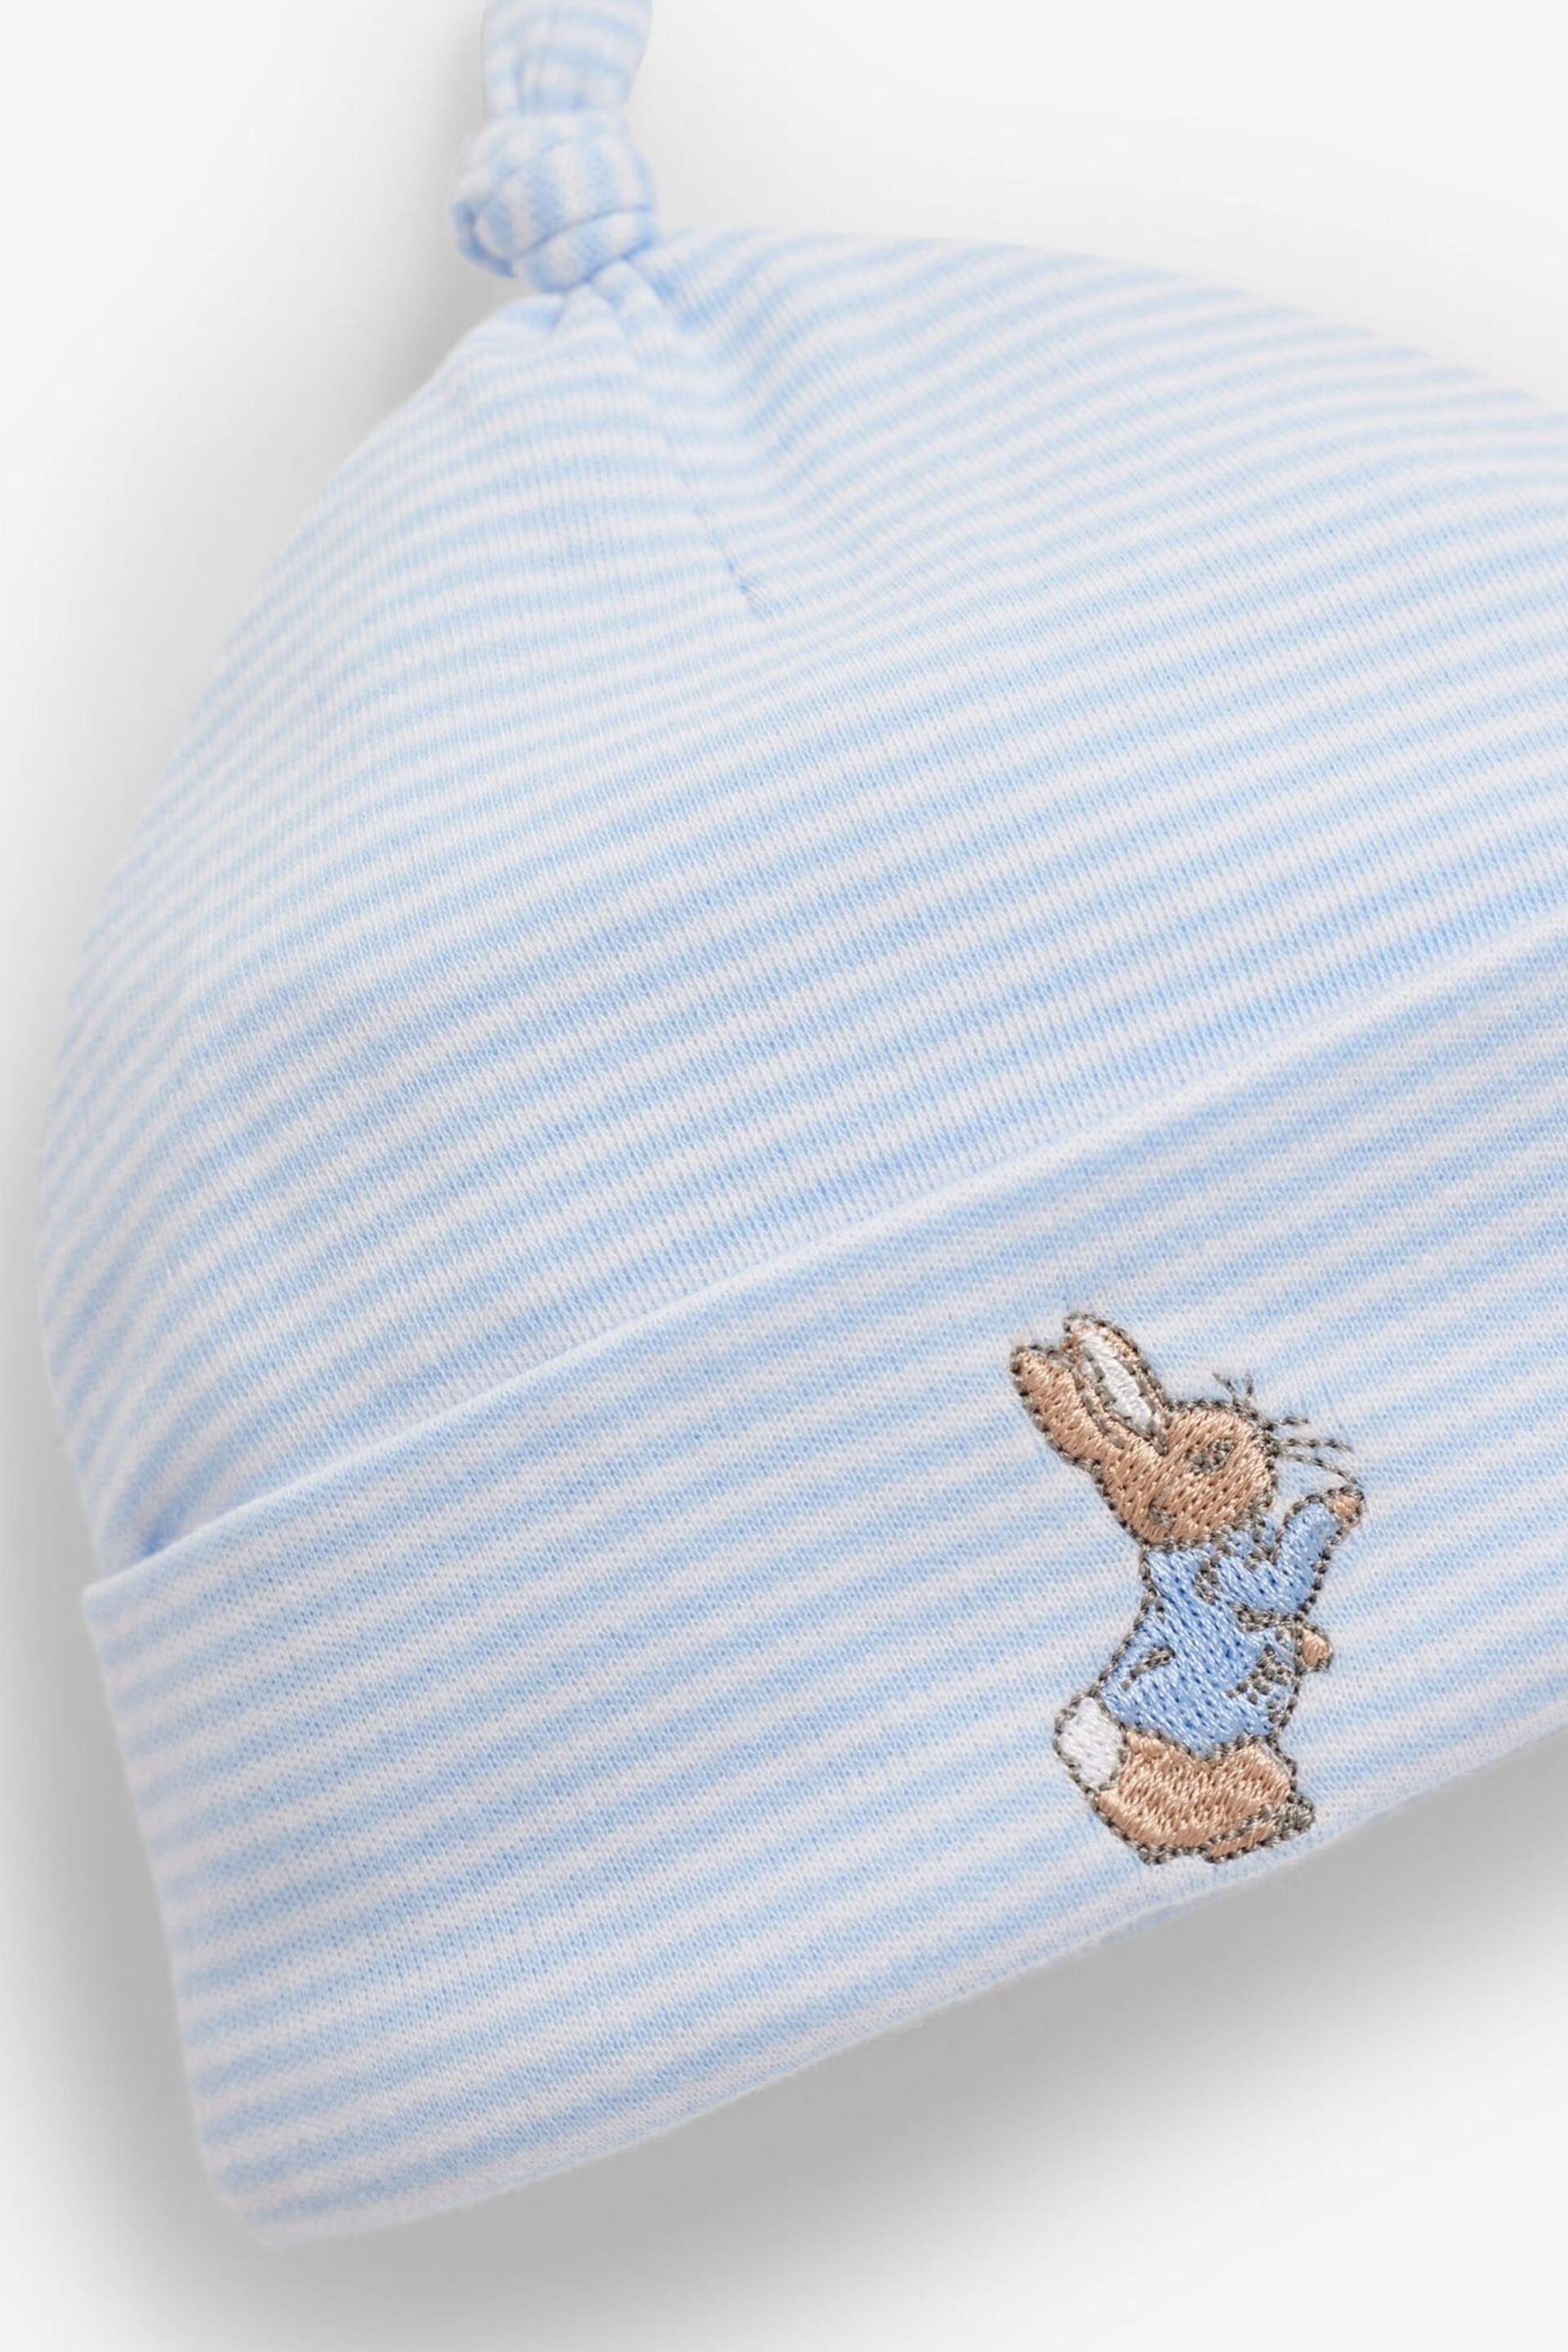 JoJo Maman Bébé Blue 2-Piece Peter Rabbit Smocked Baby Sleepsuit & Hat Set - Image 5 of 5